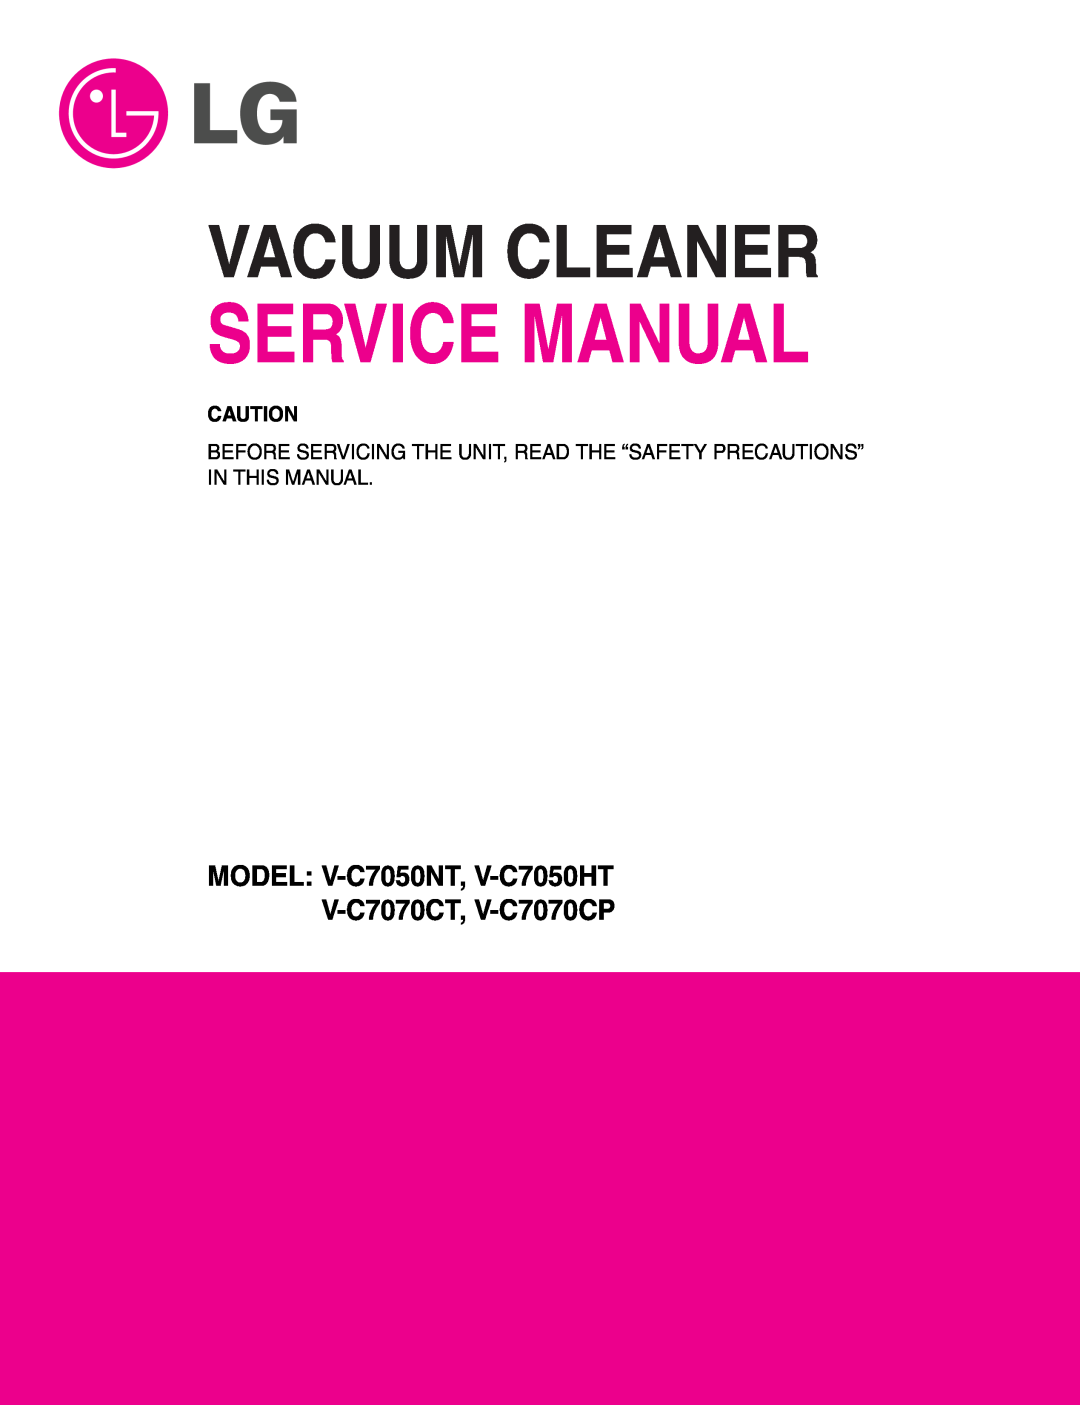 LG Electronics service manual Service Manual, Vacuum Cleaner, MODEL V-C7050NT, V-C7050HT V-C7070CT, V-C7070CP 